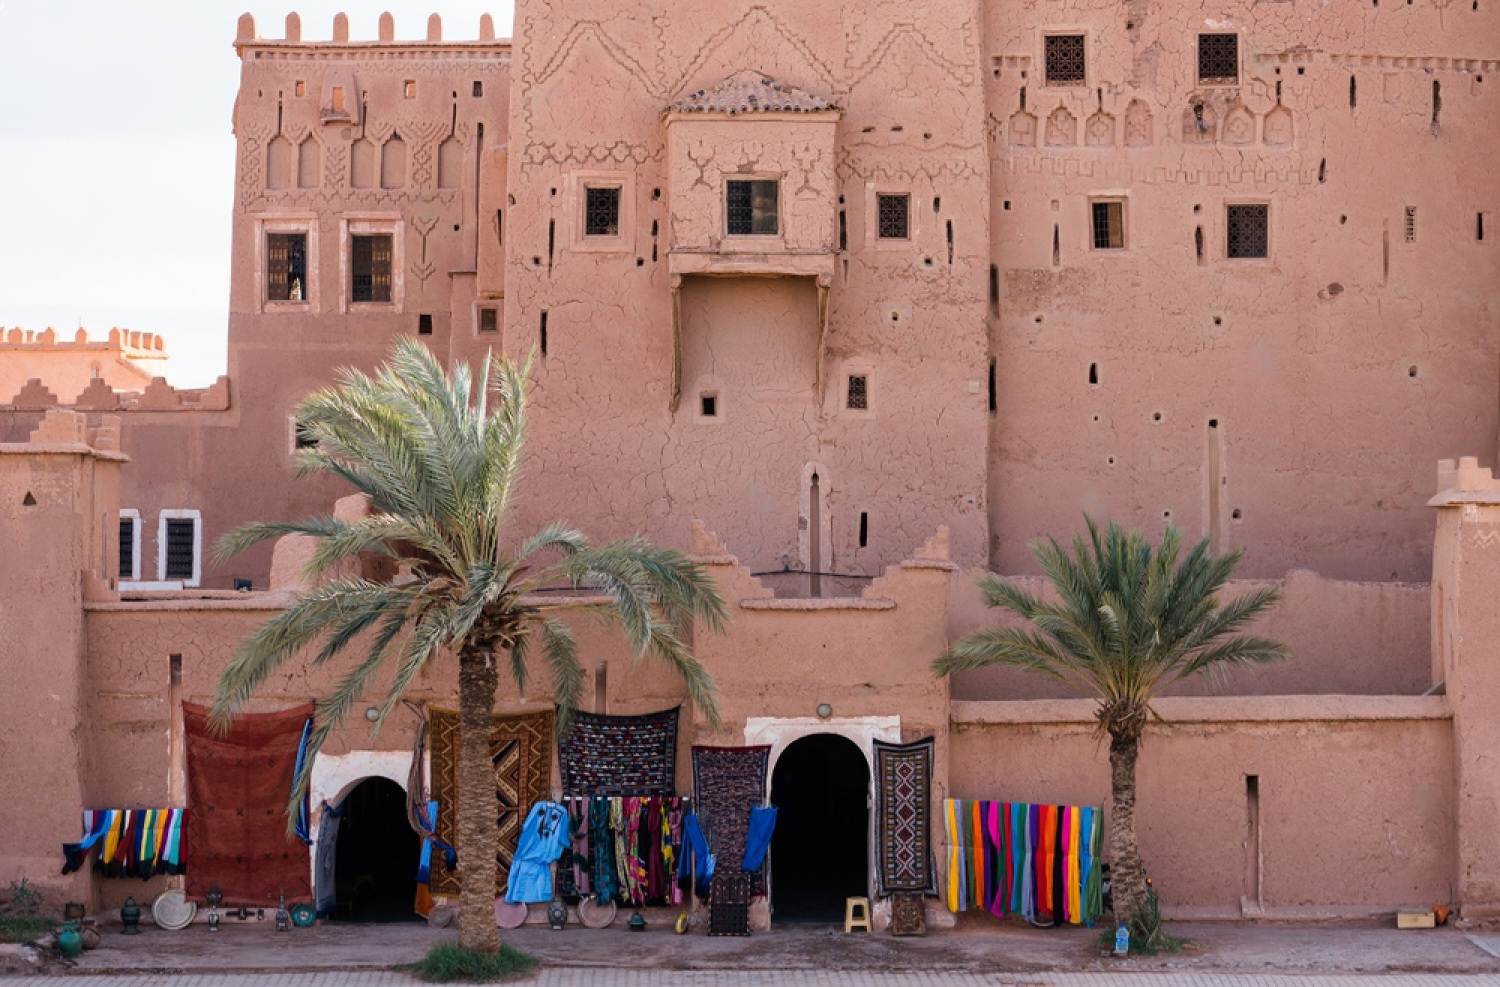 Day 2: Ouarzazate to Boulamn Dades